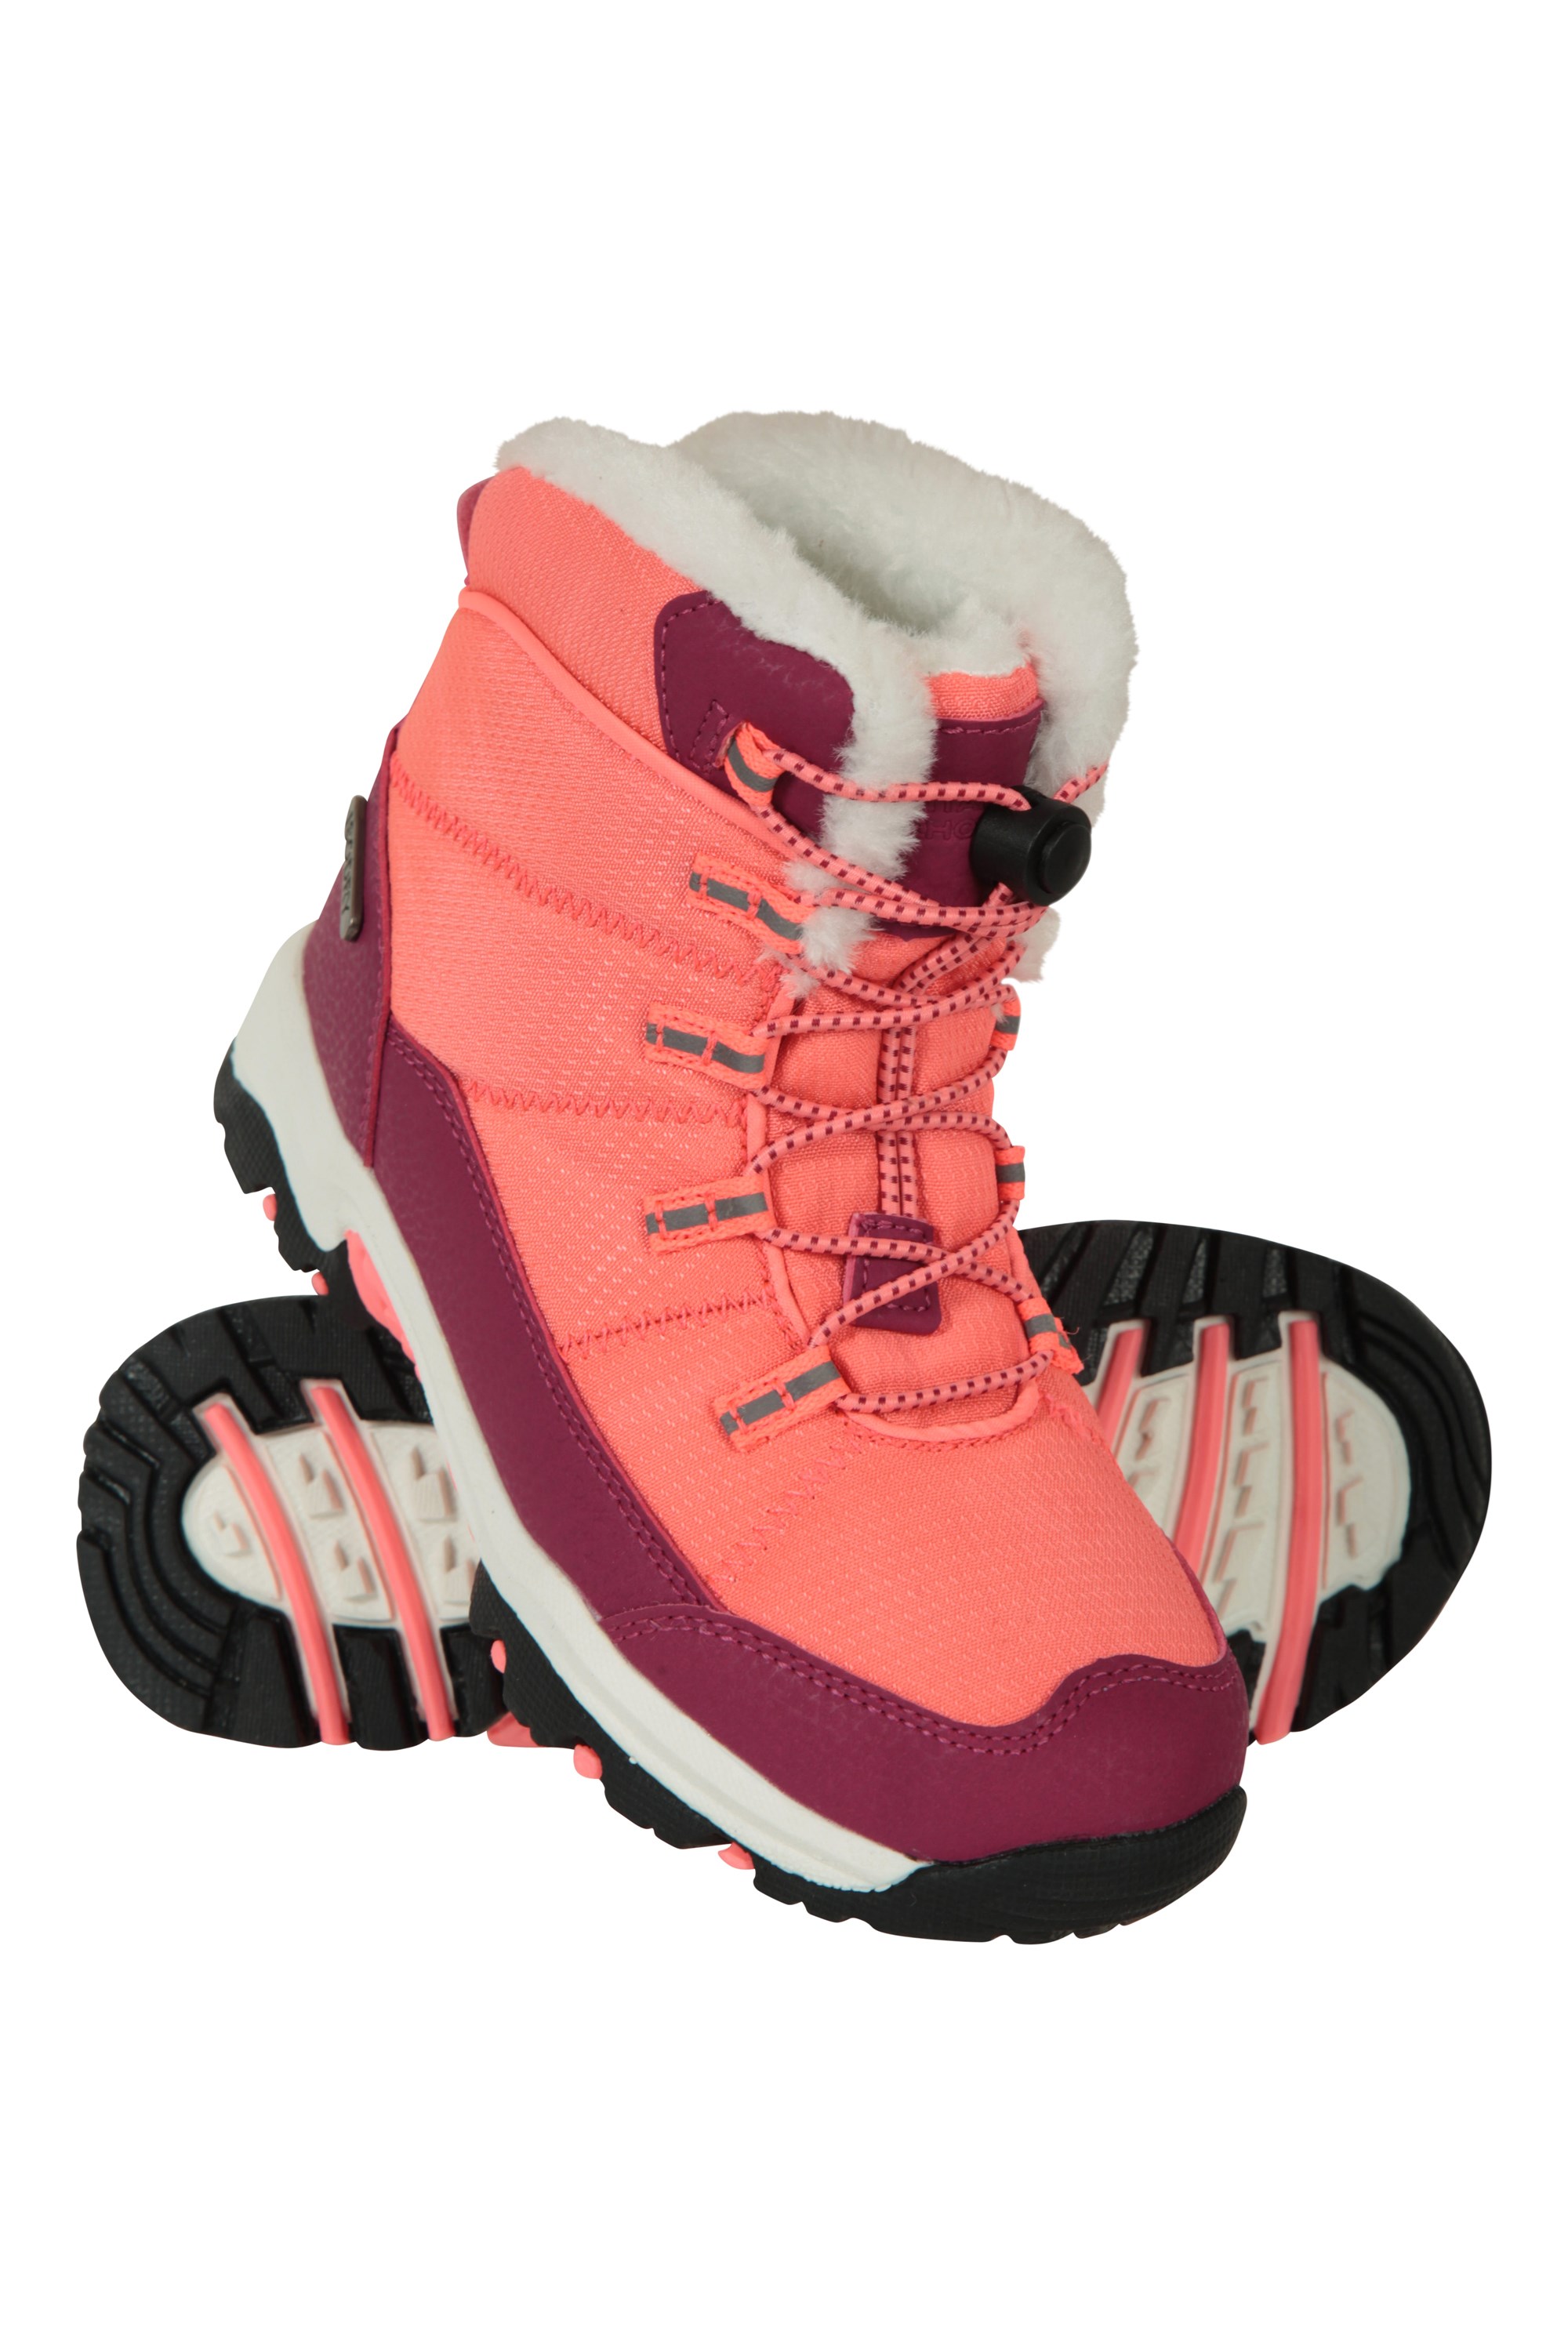 kids snow boots size 12